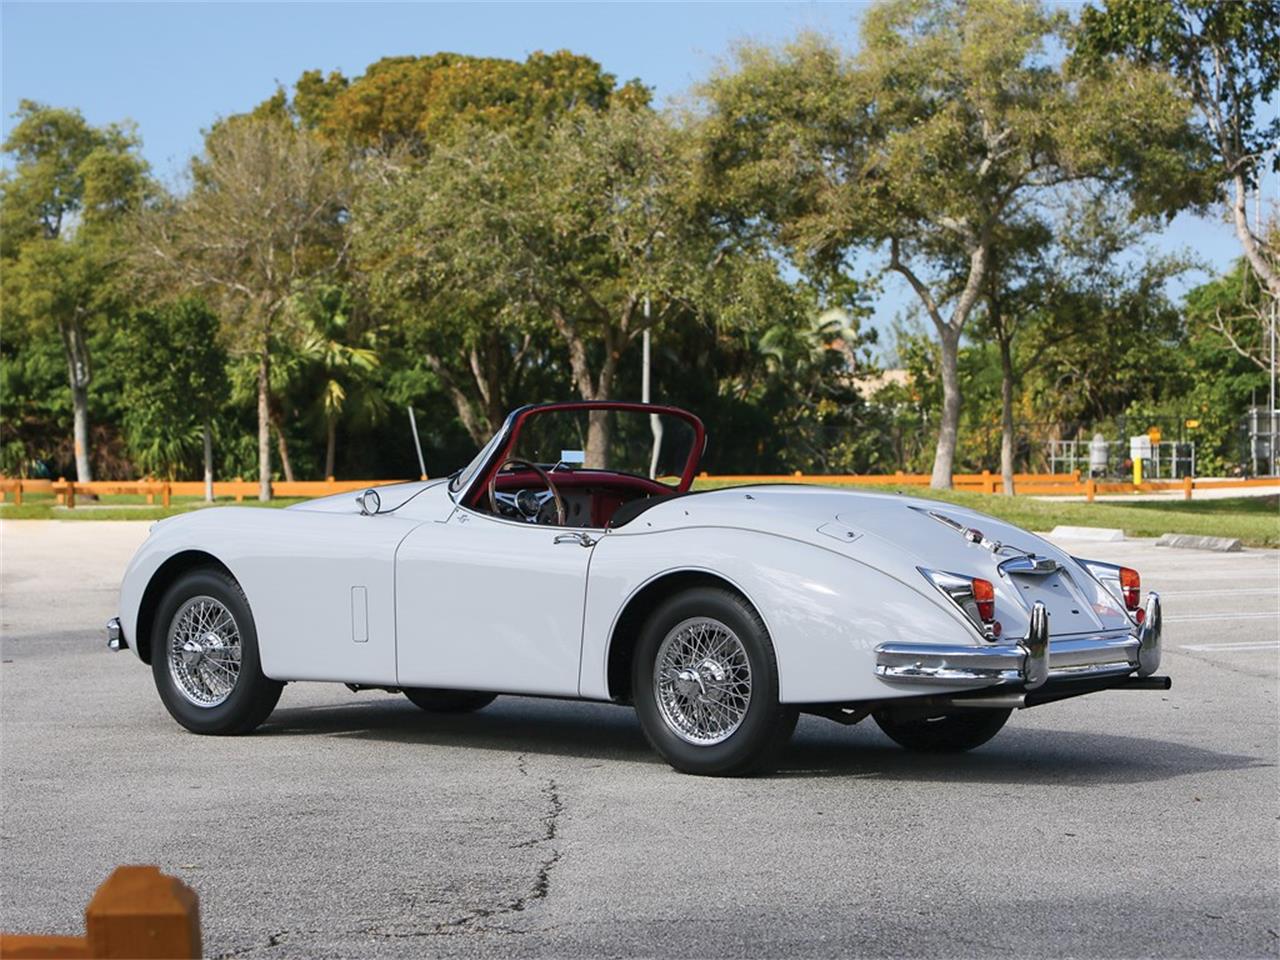 For Sale at Auction: 1960 Jaguar XK150 for sale in Fort Lauderdale, FL